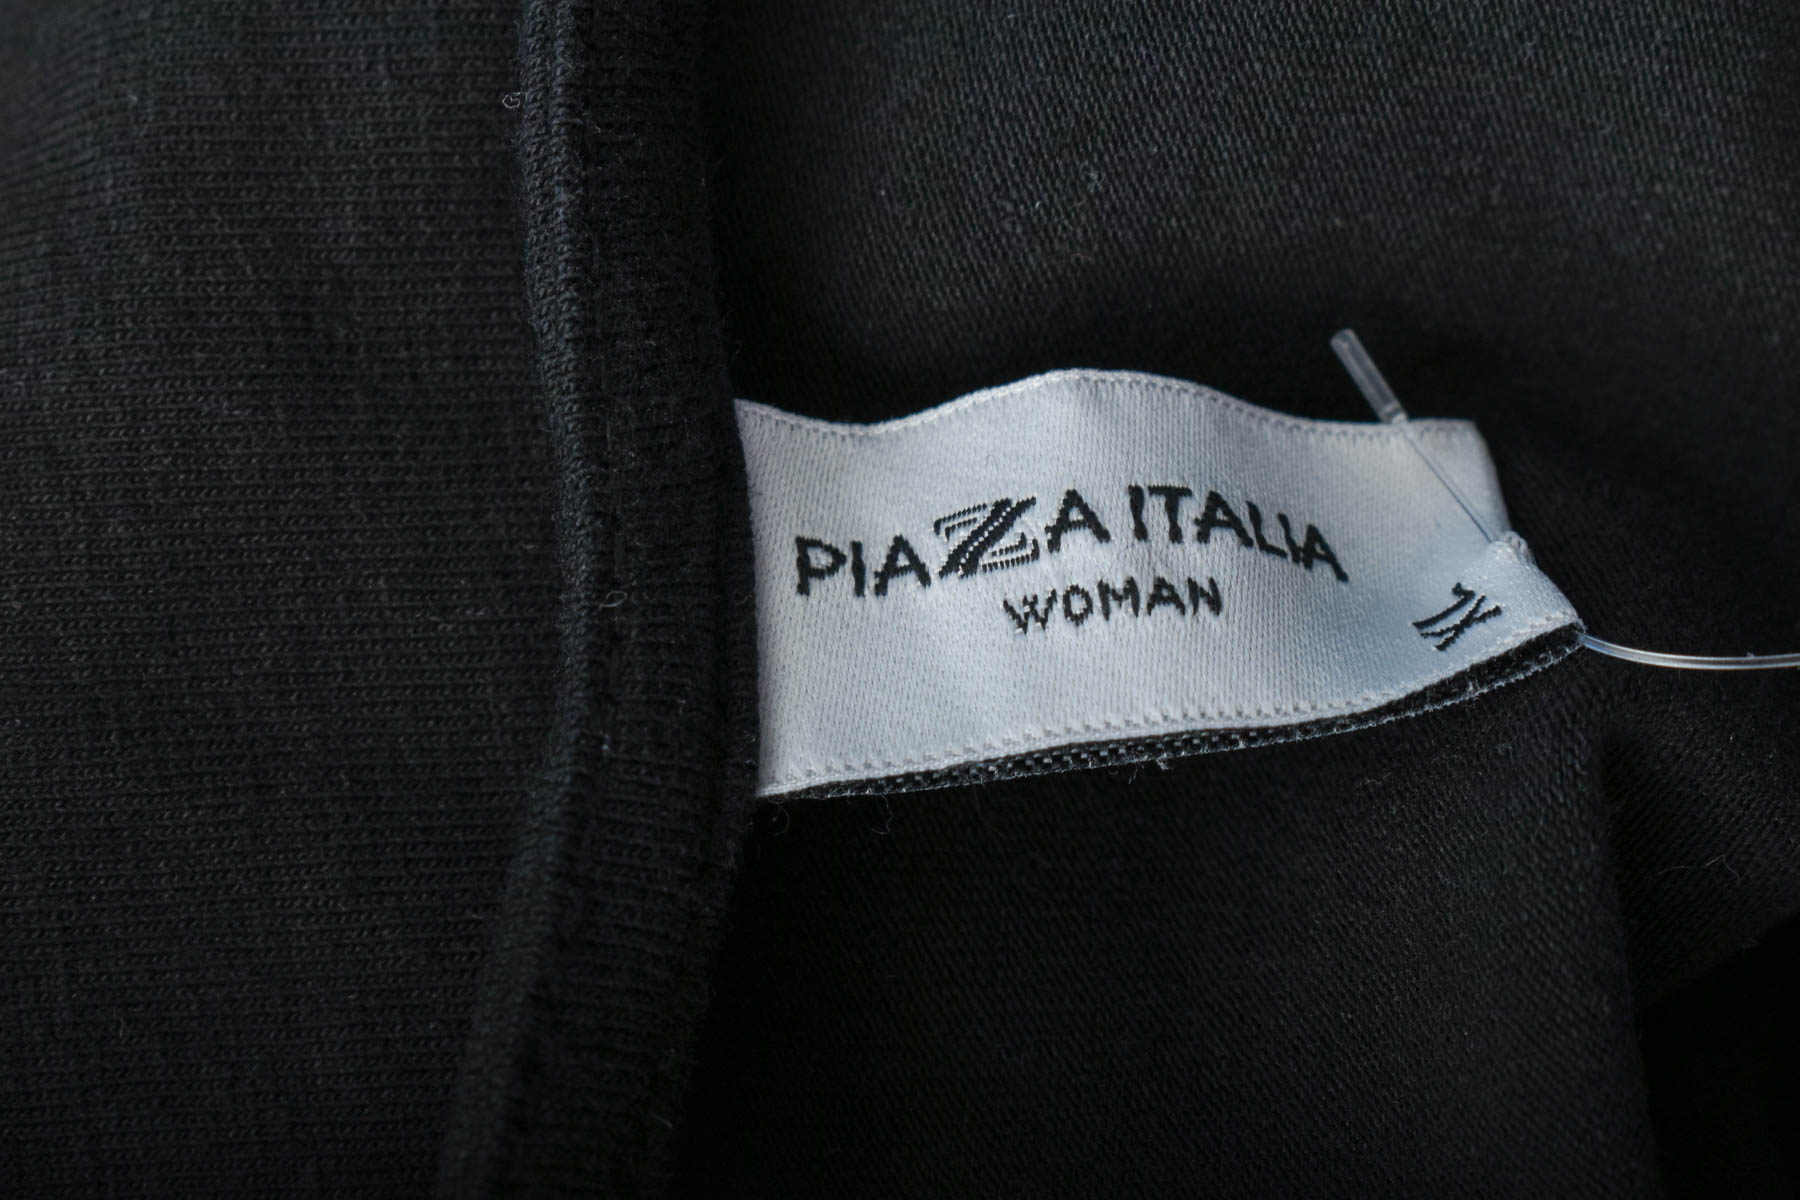 Women's t-shirt - PIAZA ITALIA - 2